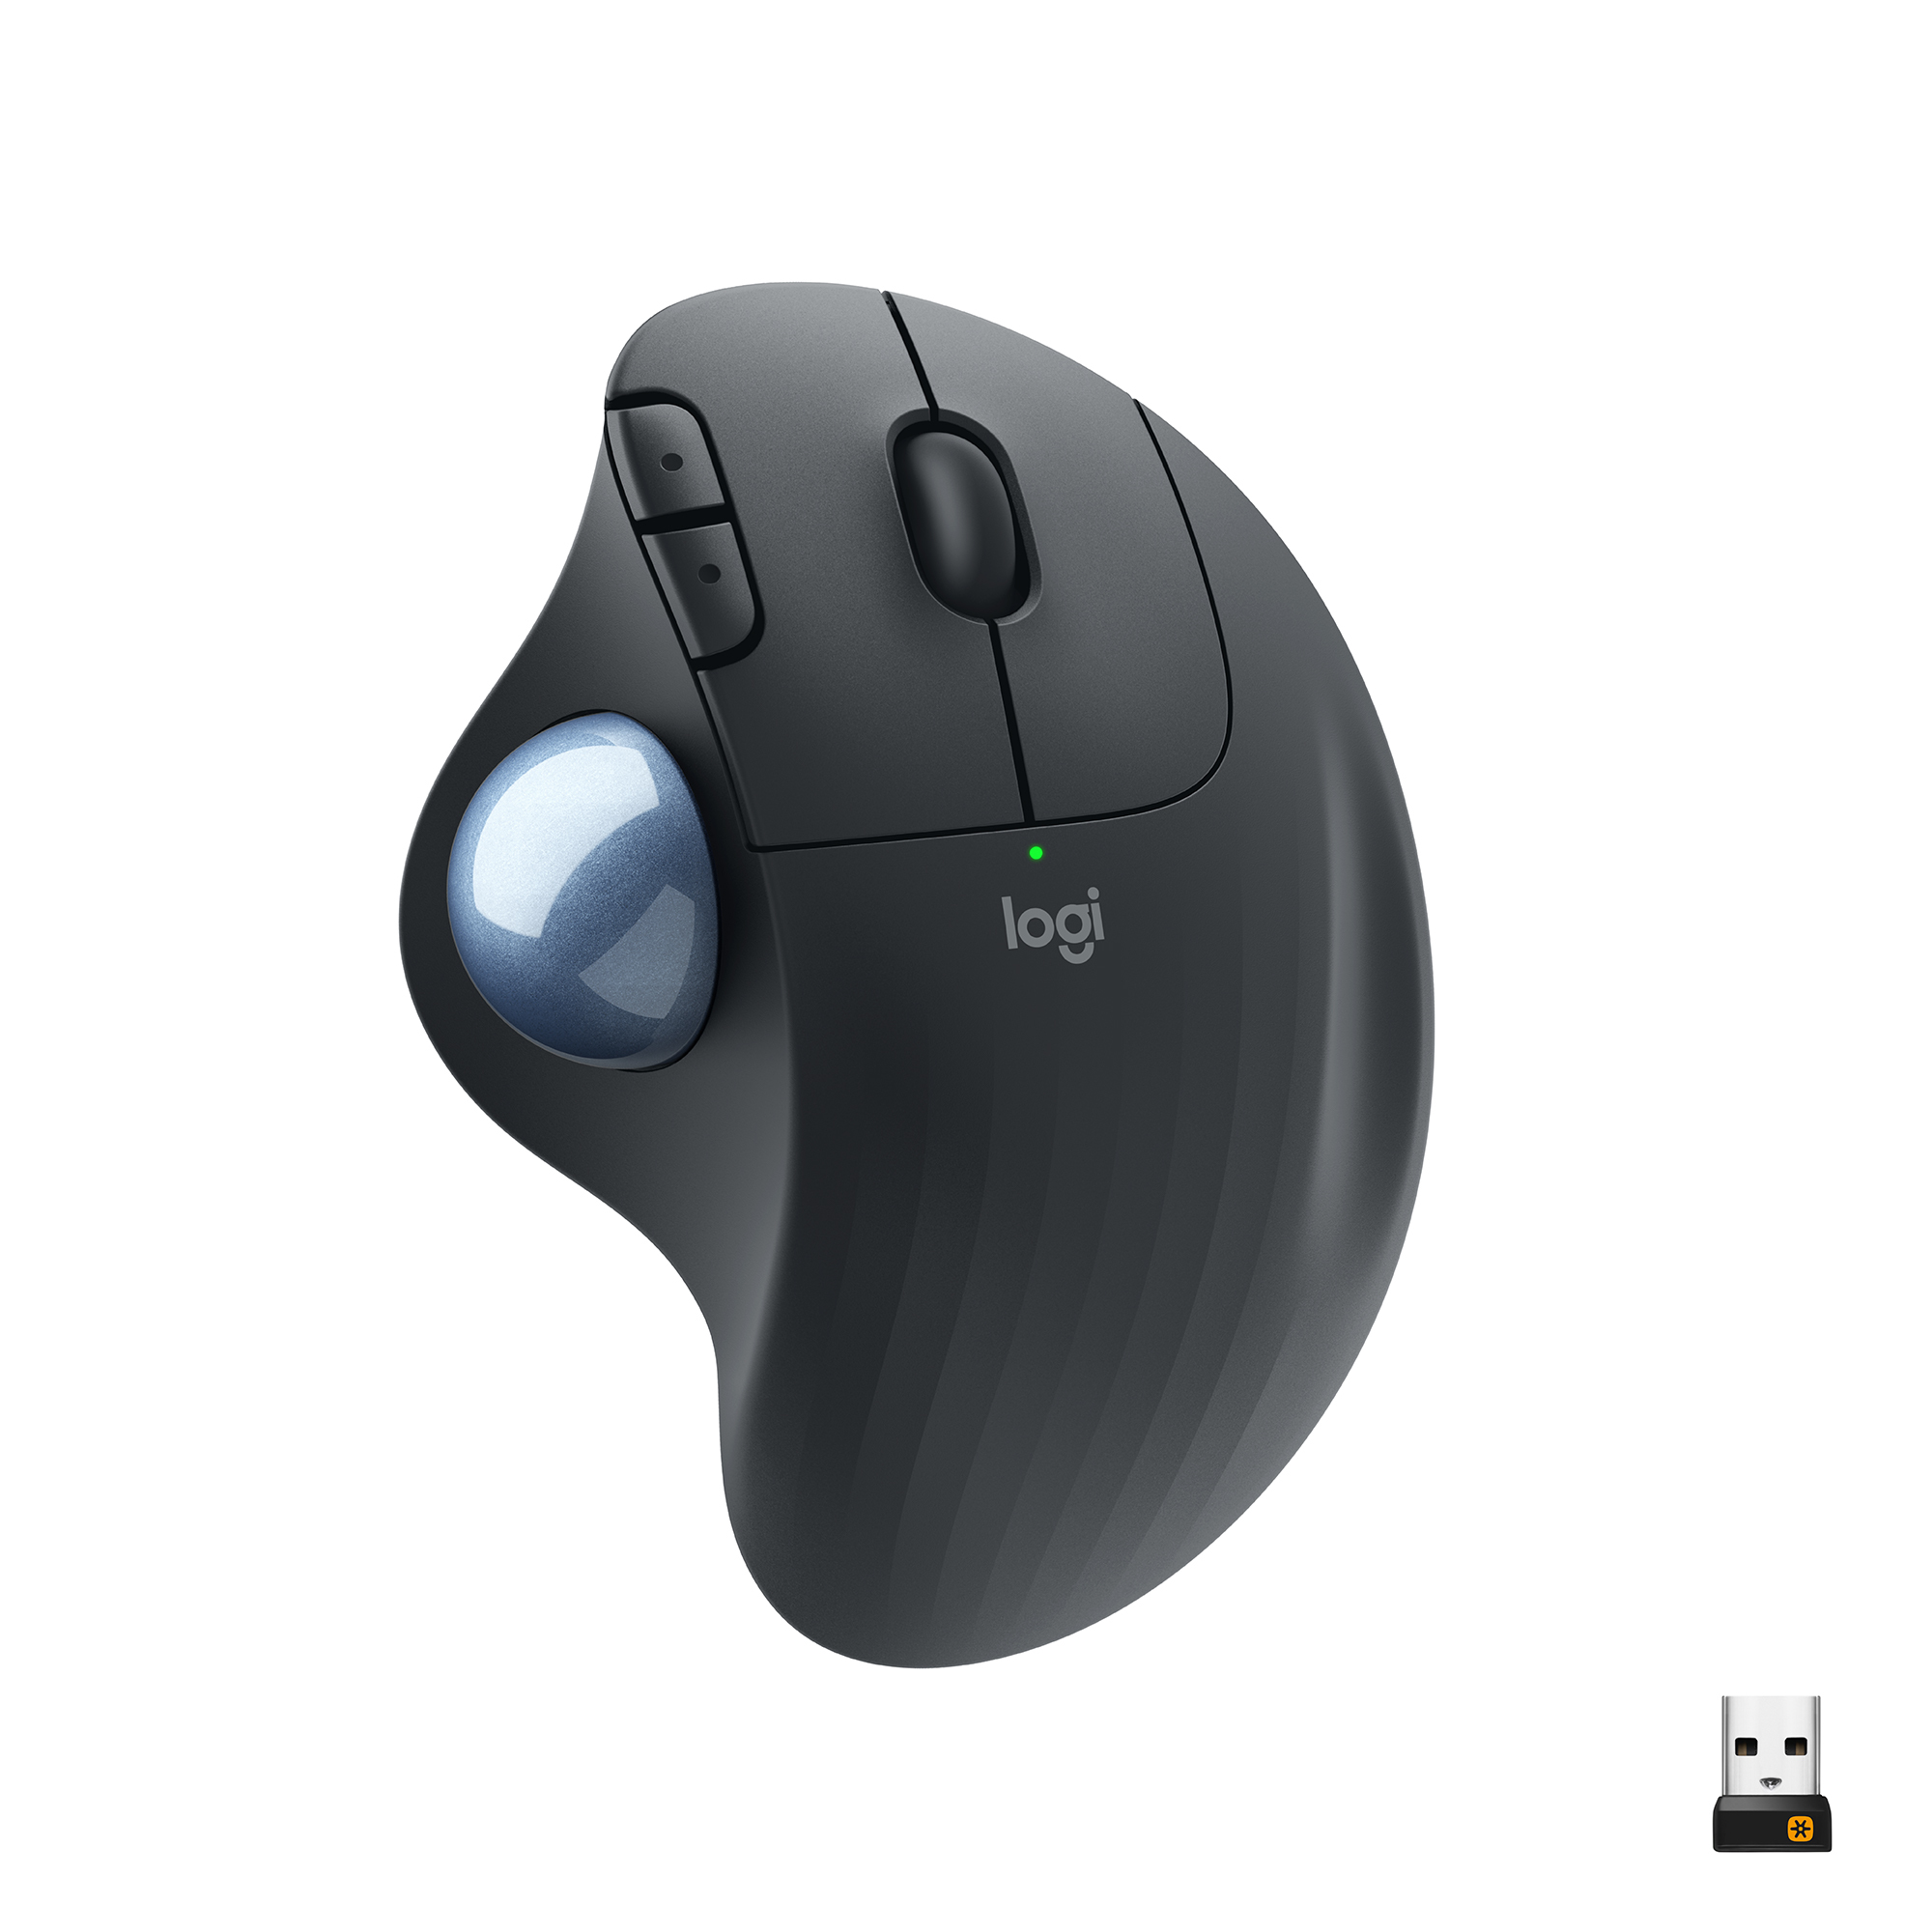 Logitech M575 ERGO - trackball mouse - graphite